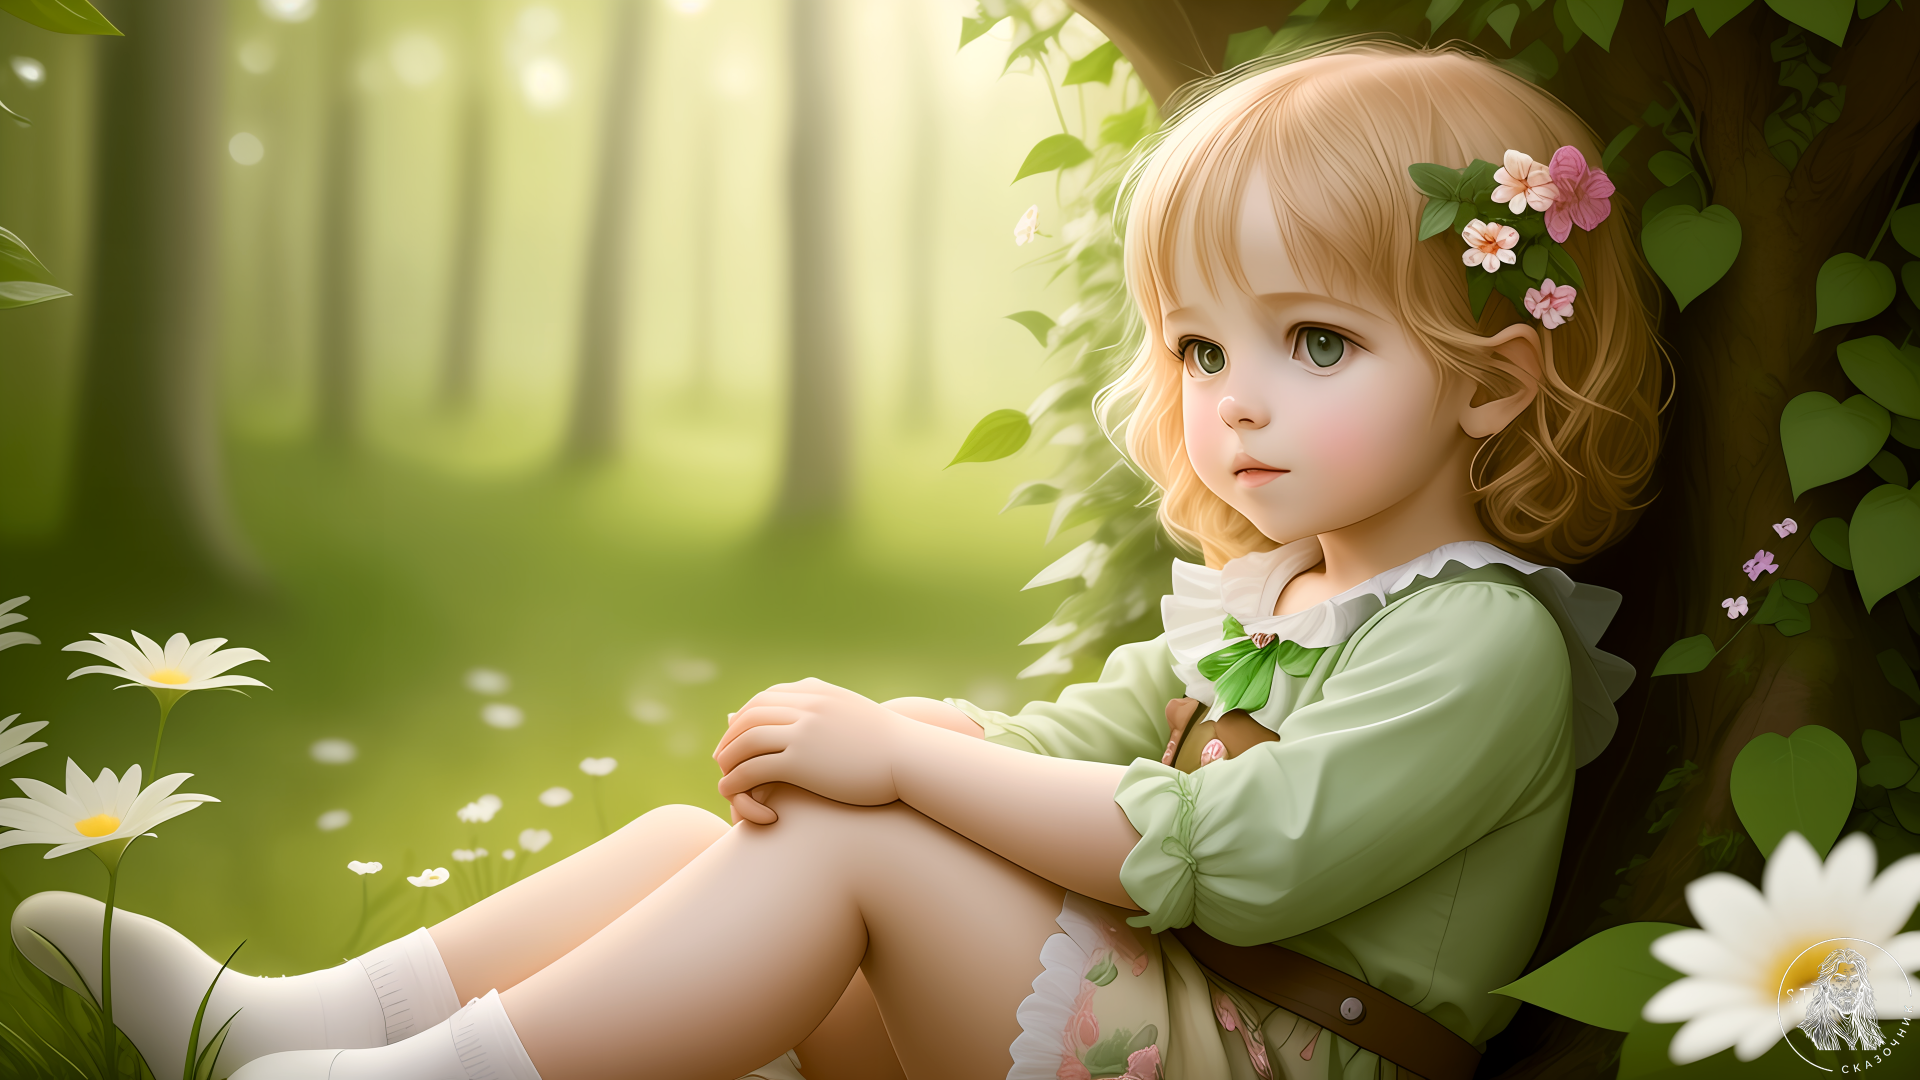 Download Cute Girl Vector Art Profile Picture Wallpaper, pic for profile  picture girl 